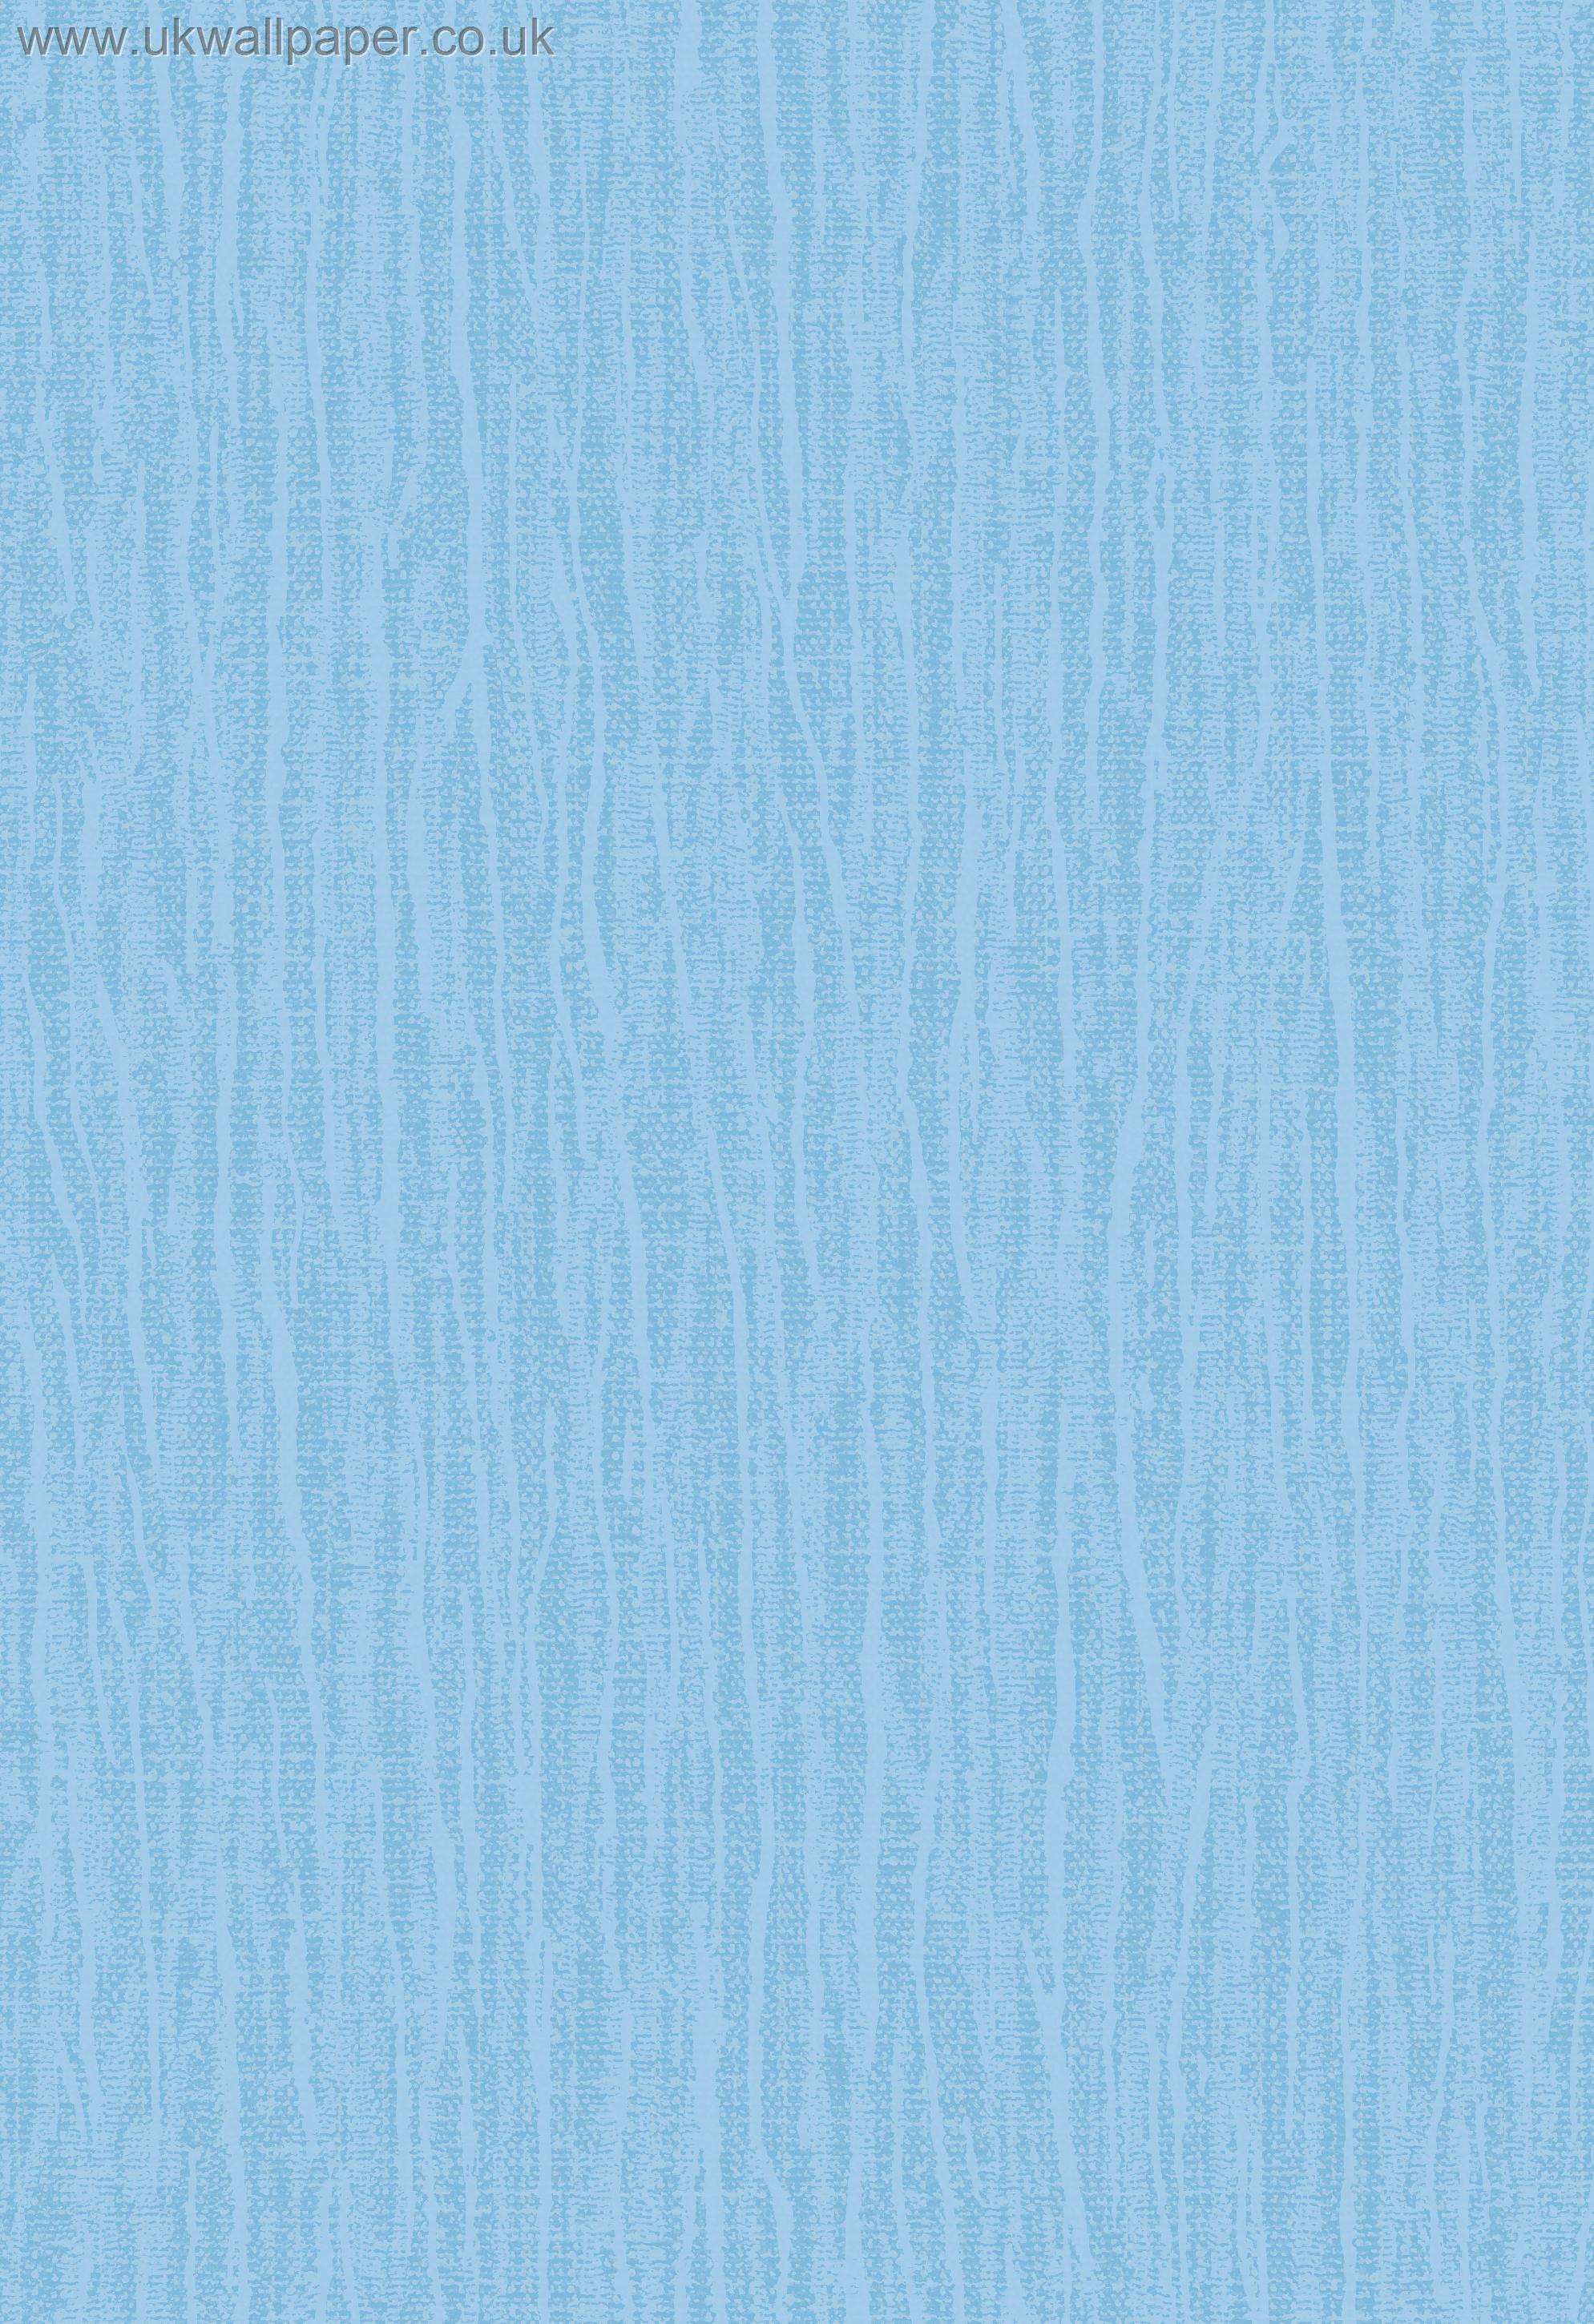  wallpaper plain blue wallpaper 10metres x 52cm random match 7 99